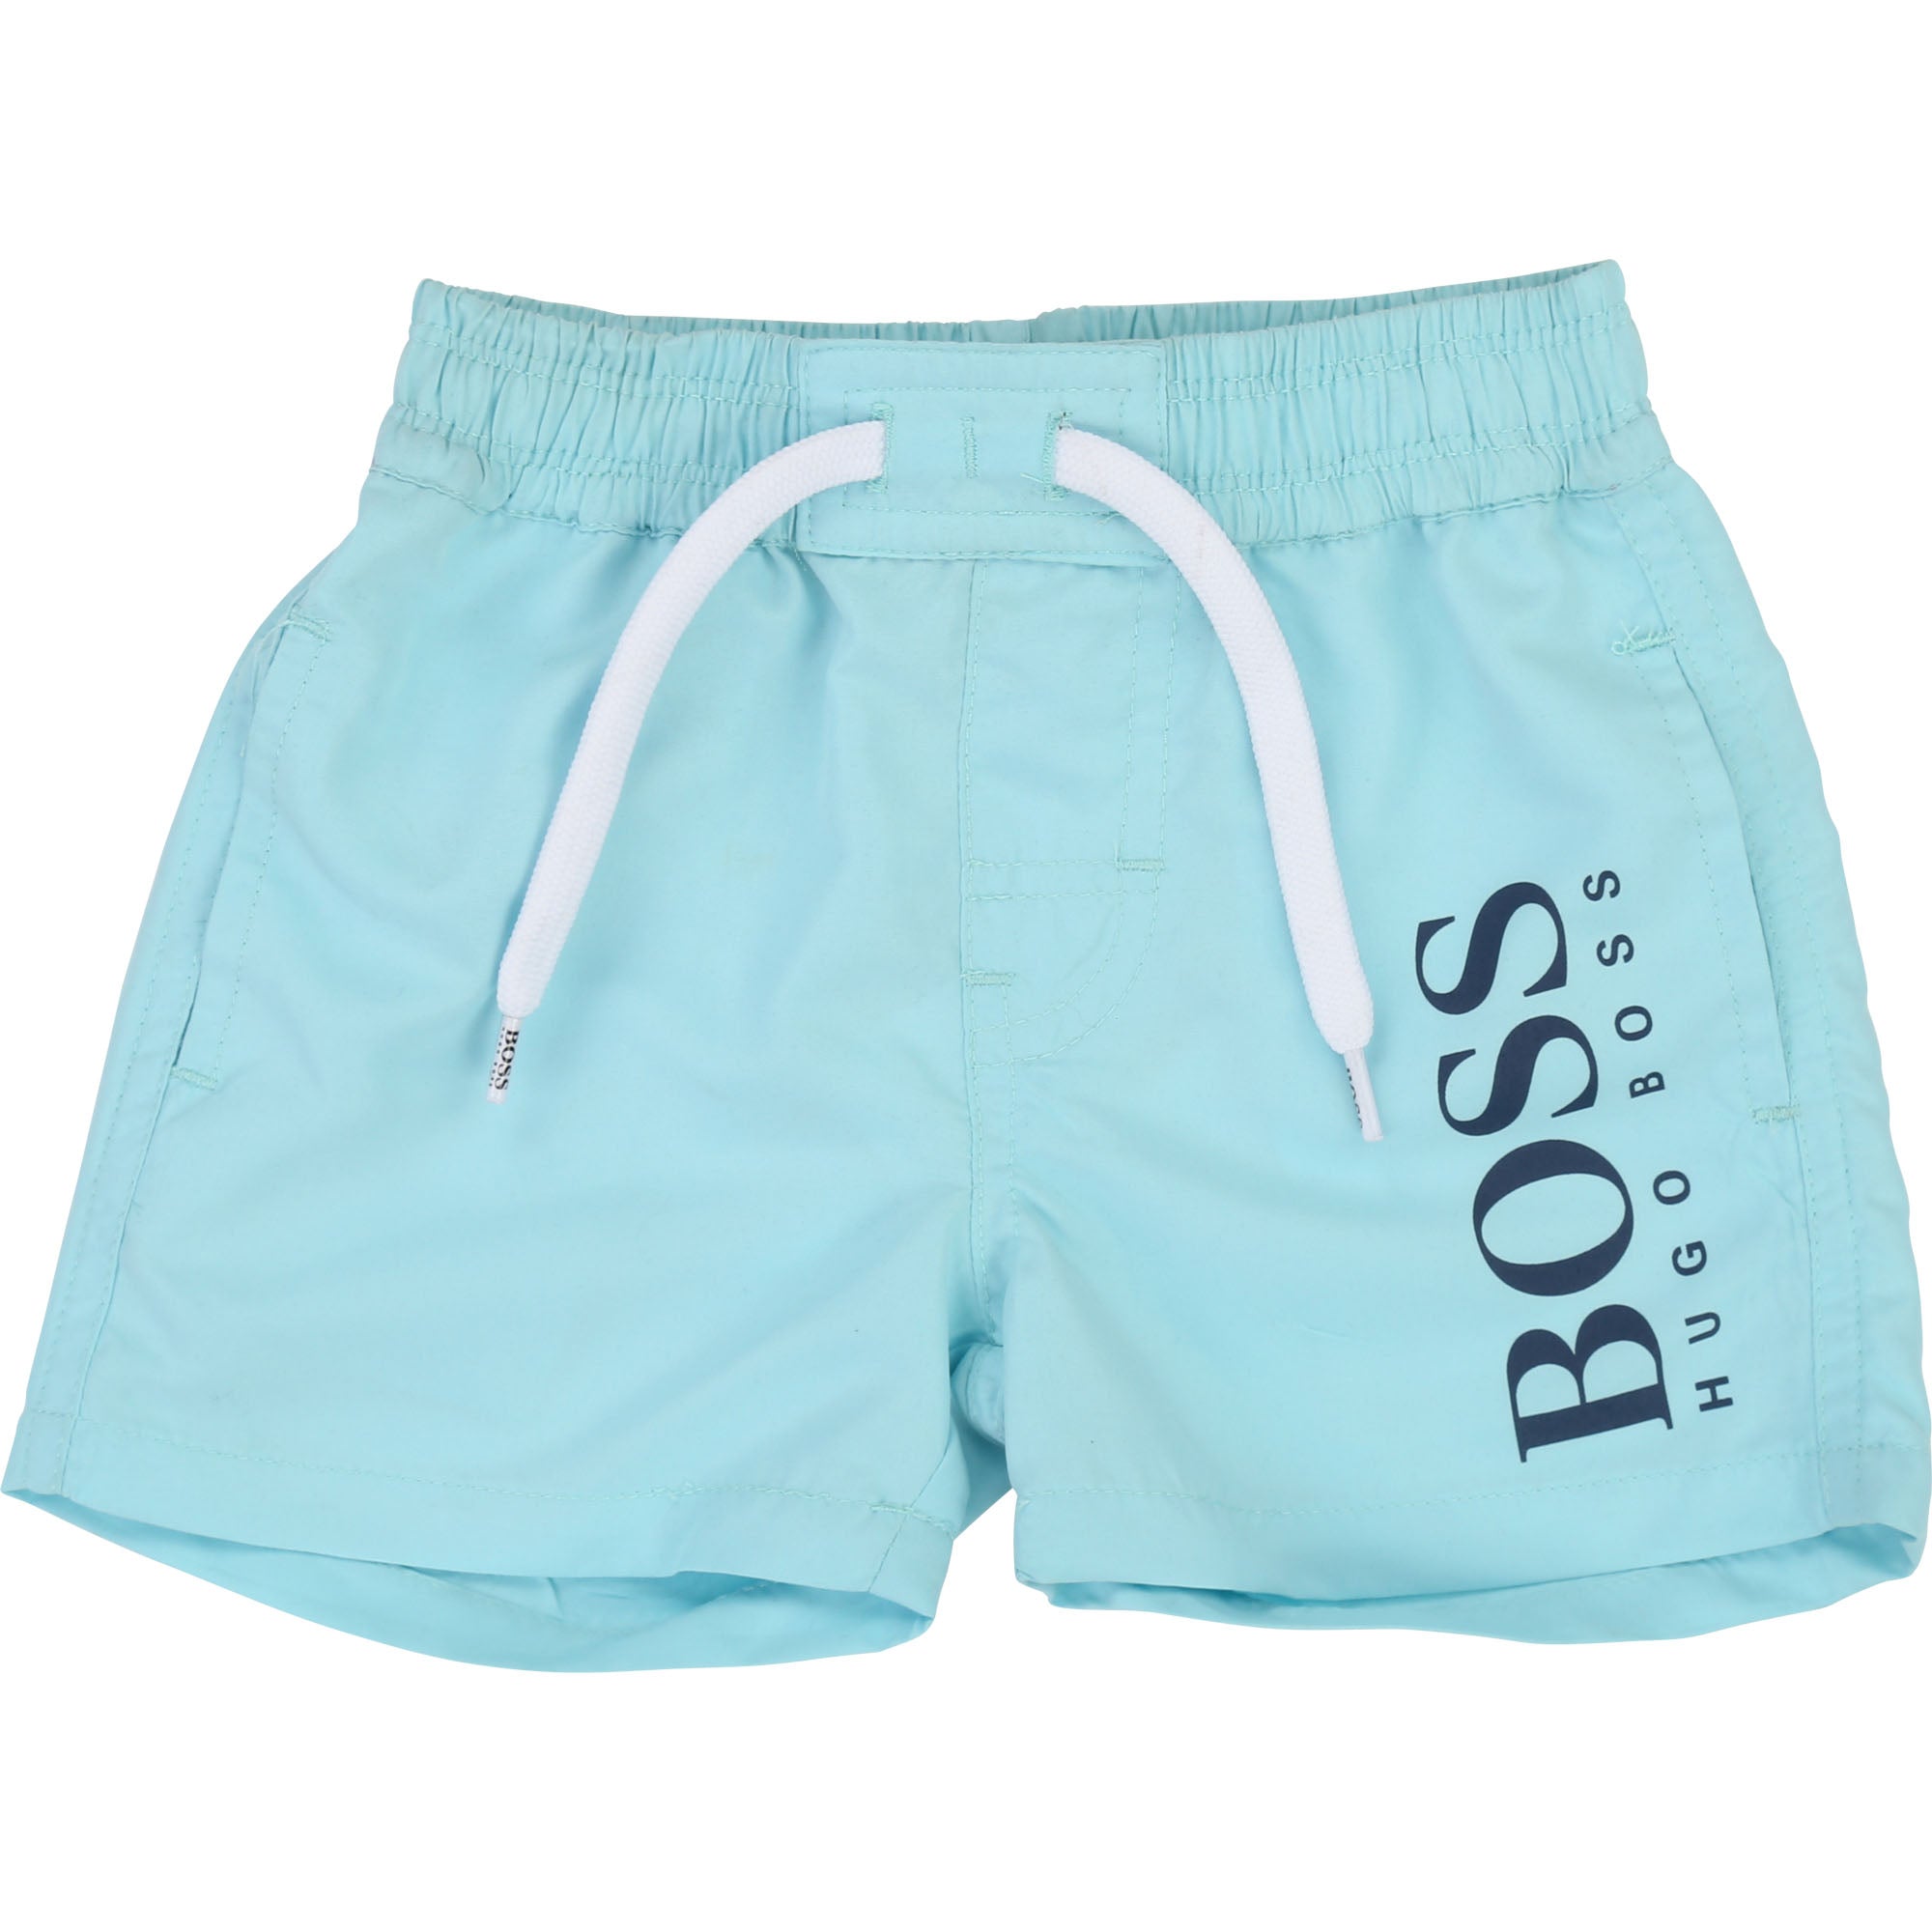 Boys Light Blue Surfer Cotton Shorts